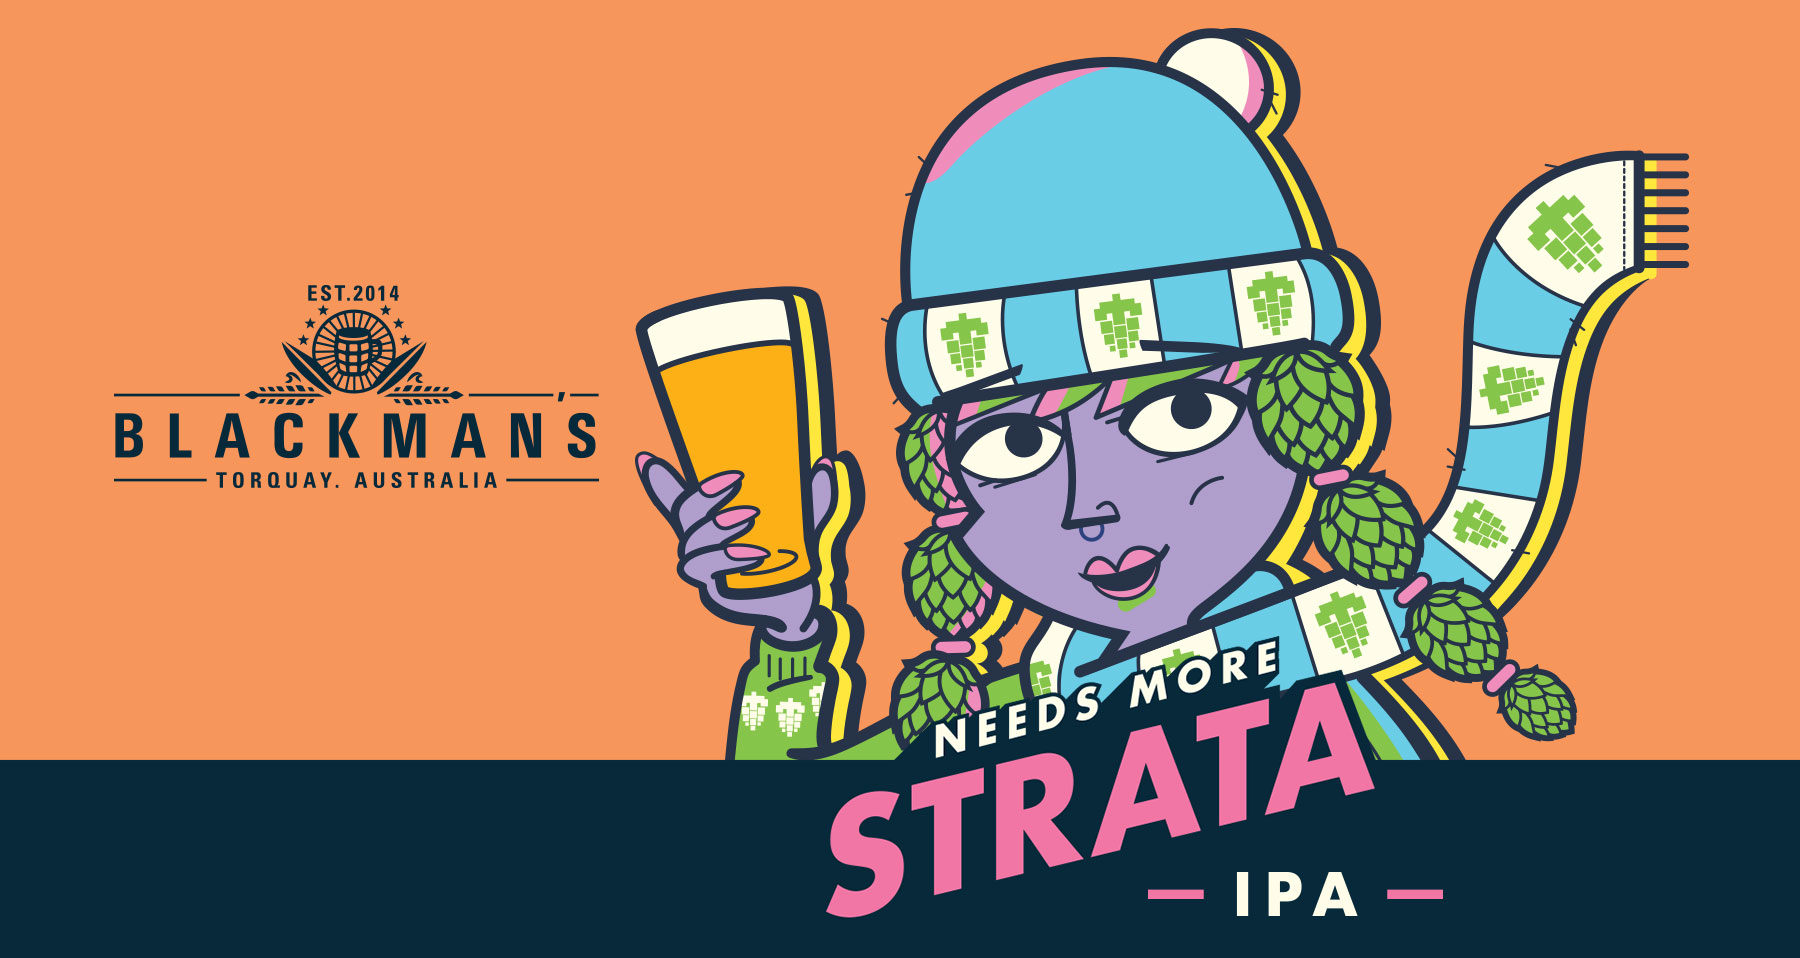 Blackman's Brewery Needs More Strata IPA